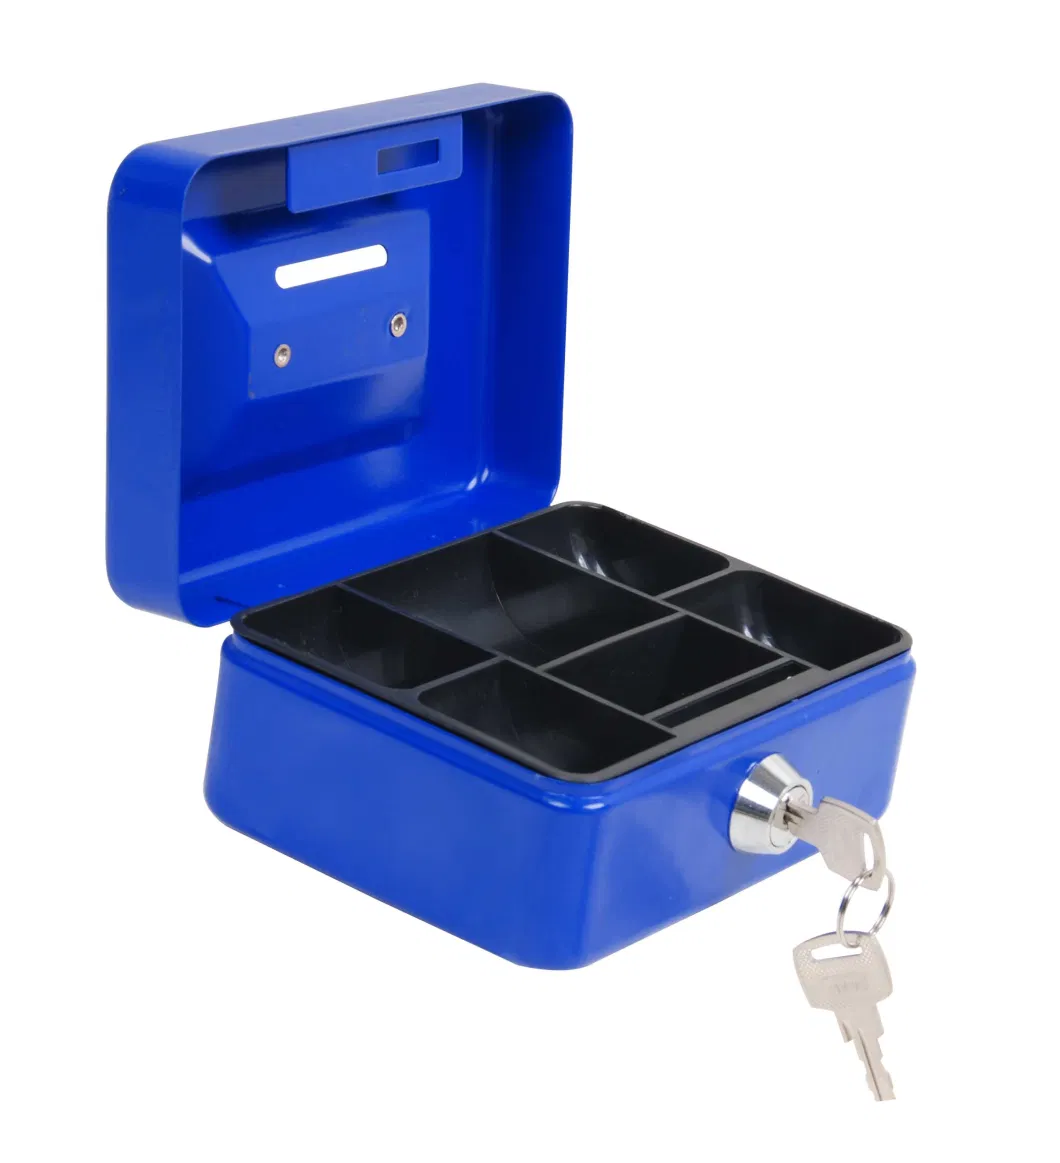 Cash Box with Money Tray, Safe Lock Box with Key